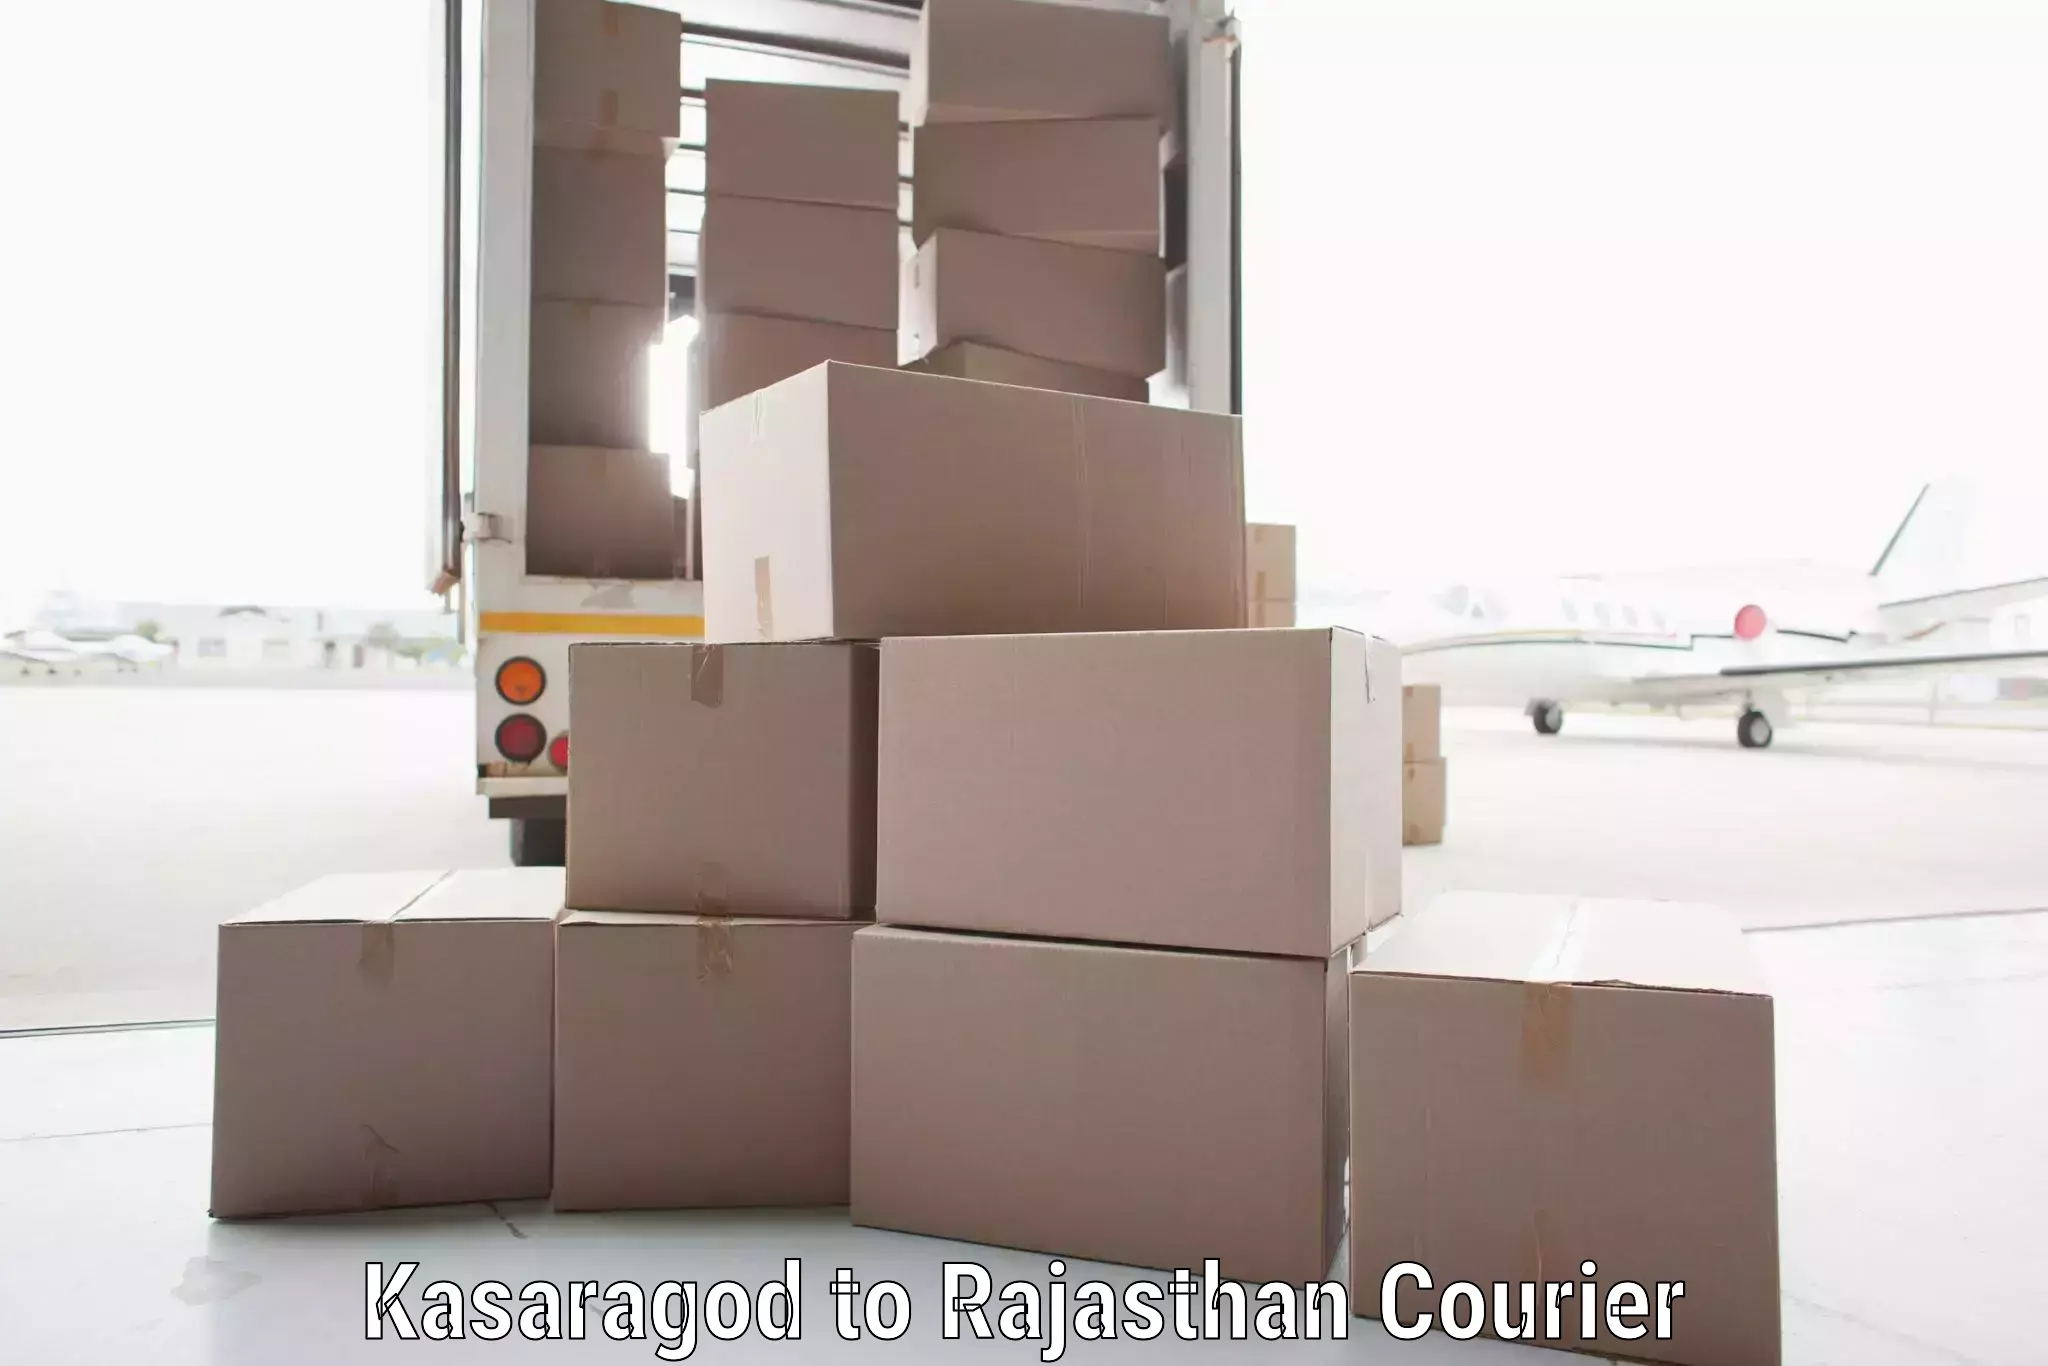 Express delivery capabilities Kasaragod to Kishangarh